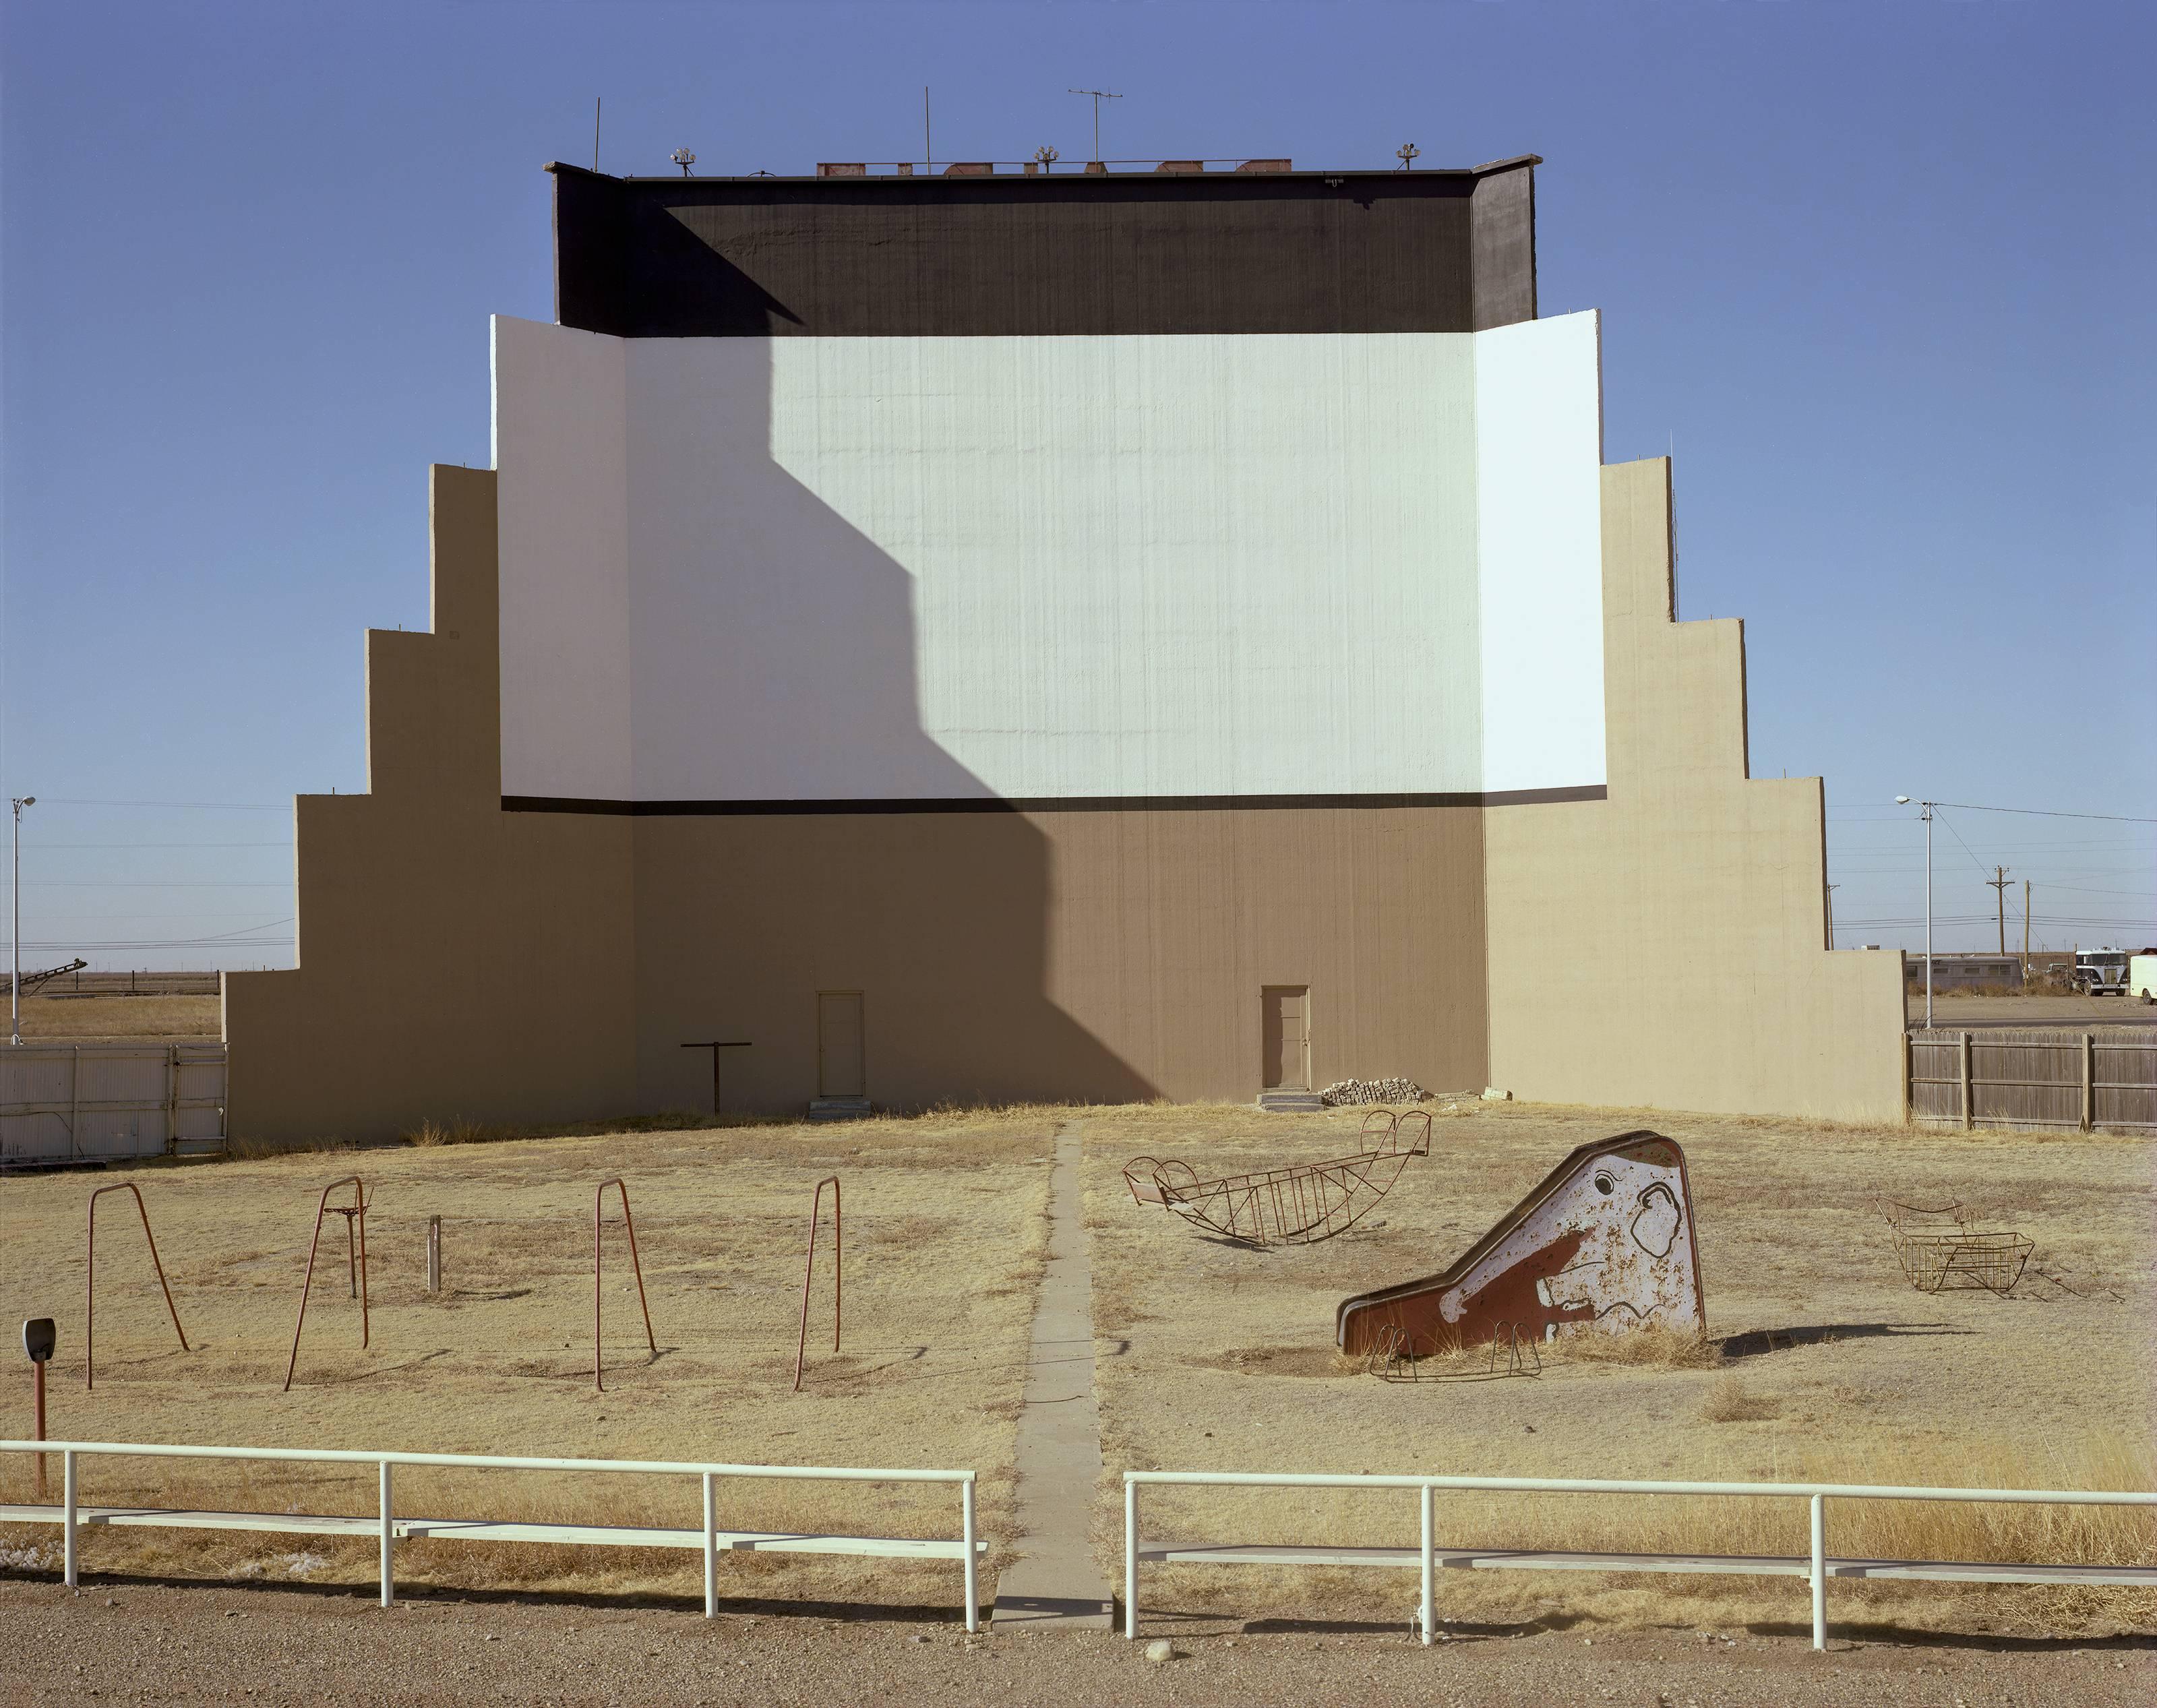 Prairie Drive-in theater, Dumas, Texas, January 9, 1981